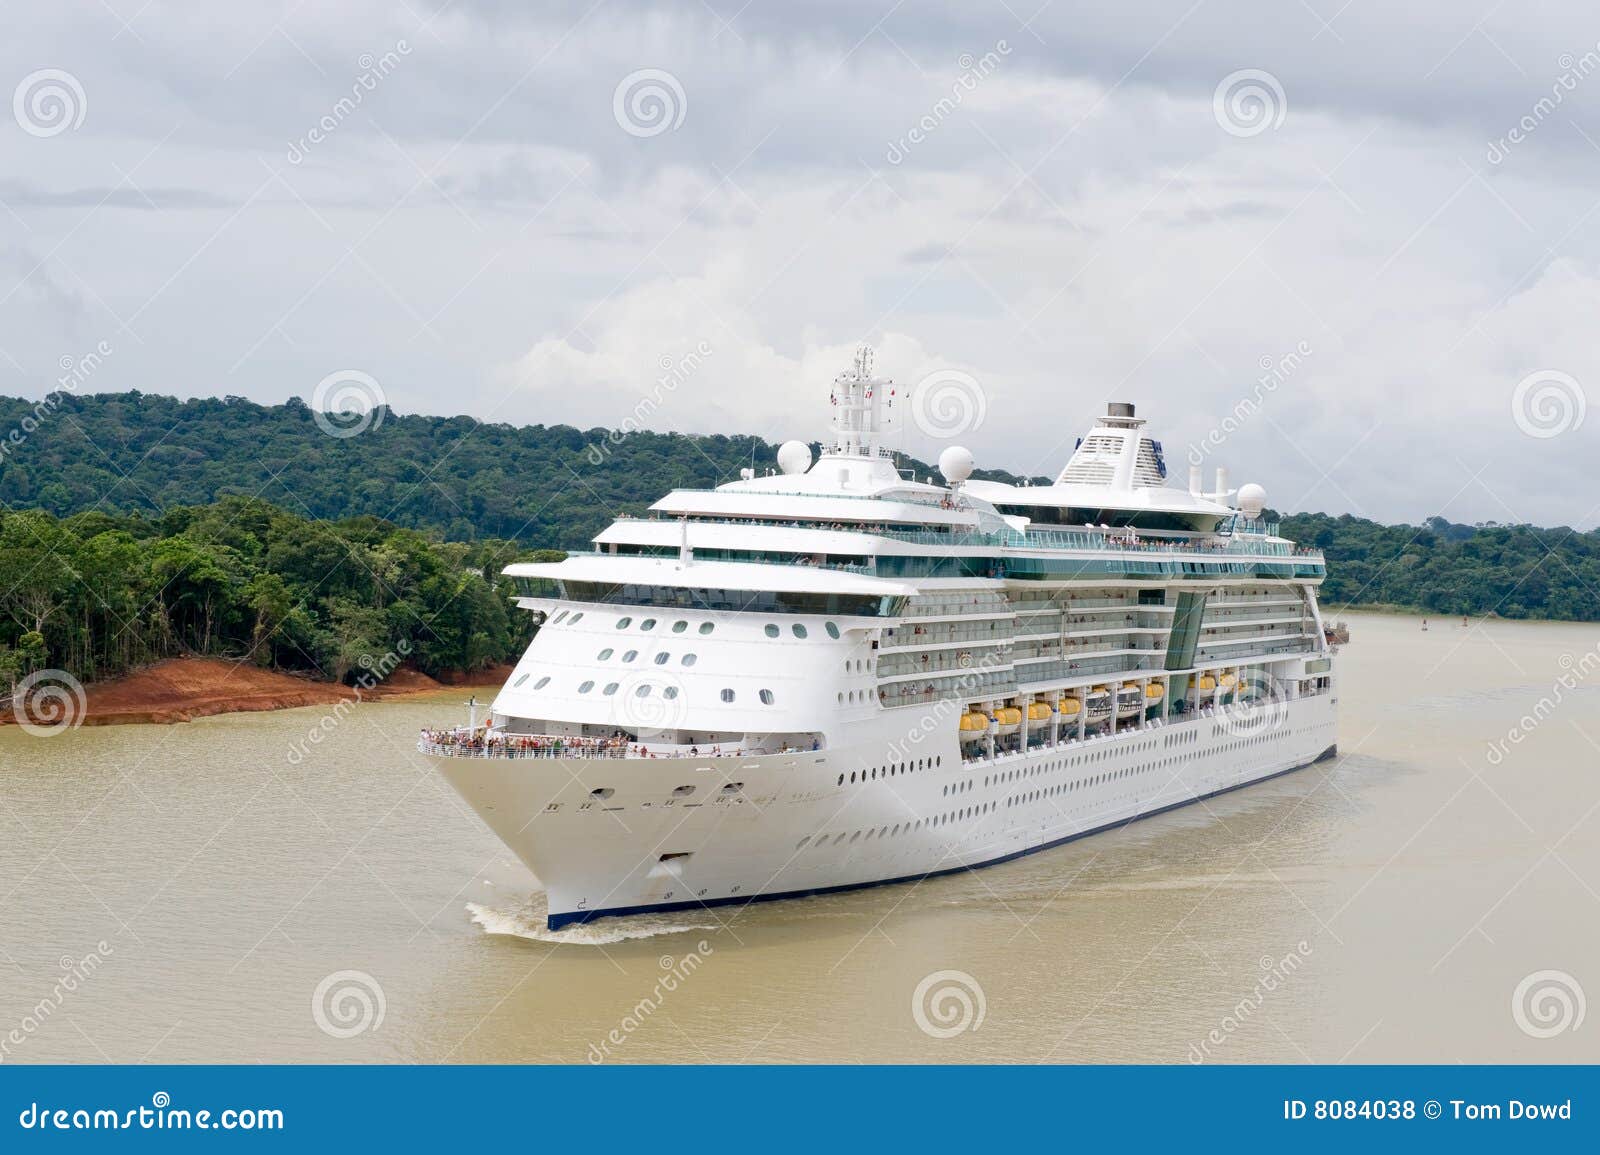 cruise ship in panama canal